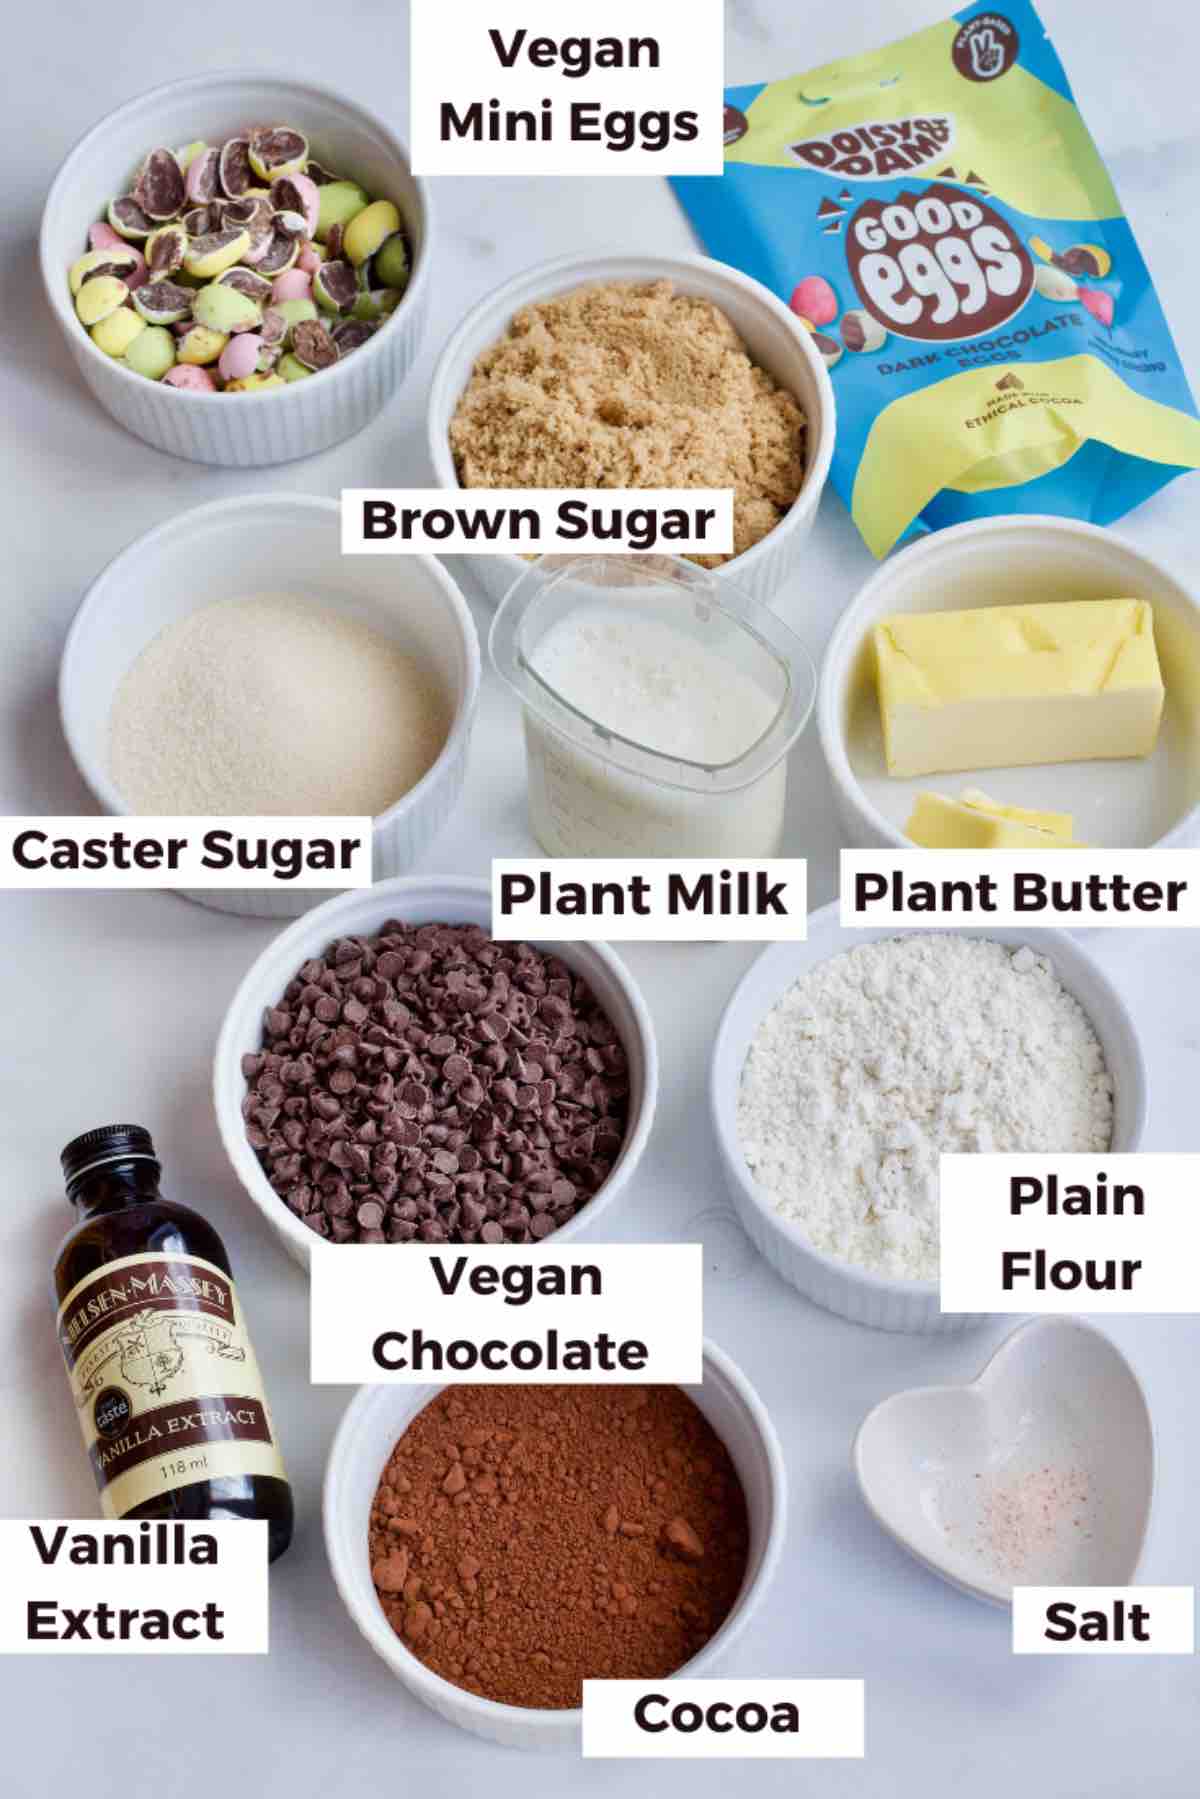 Ingredients for mini egg brownies.